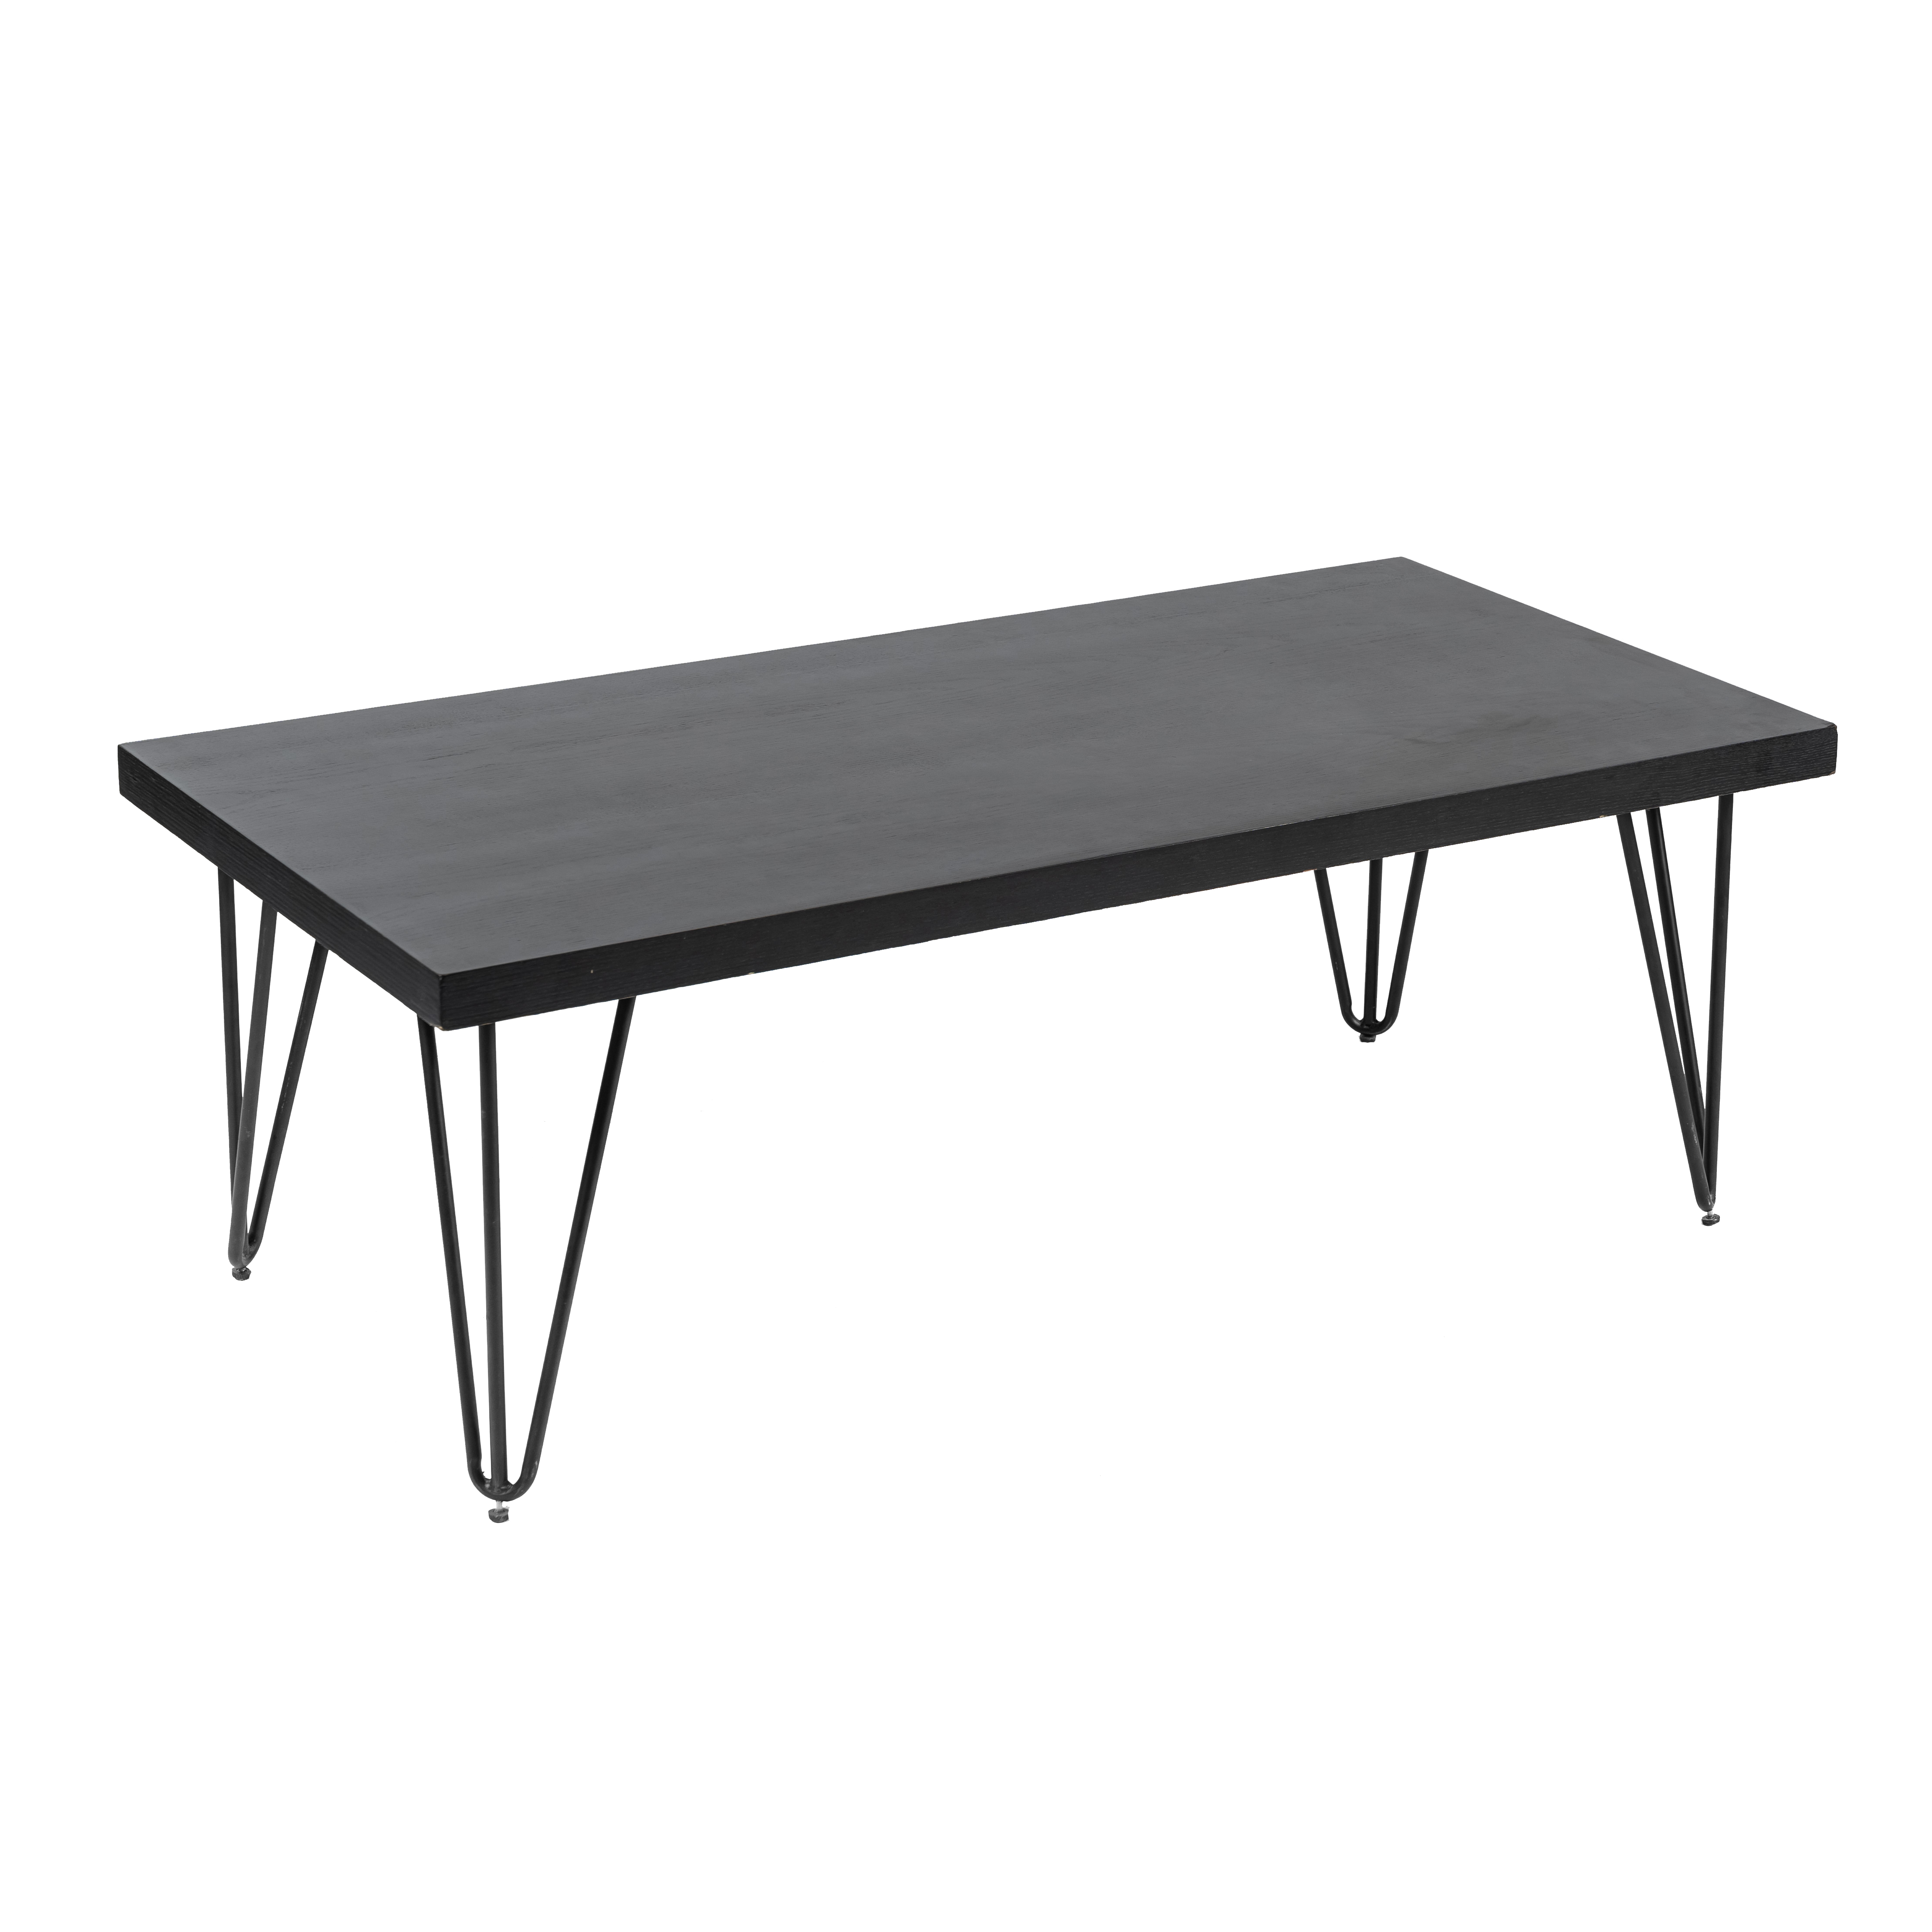 Blackwash Rectangle Coffee Table Black legs  120x60